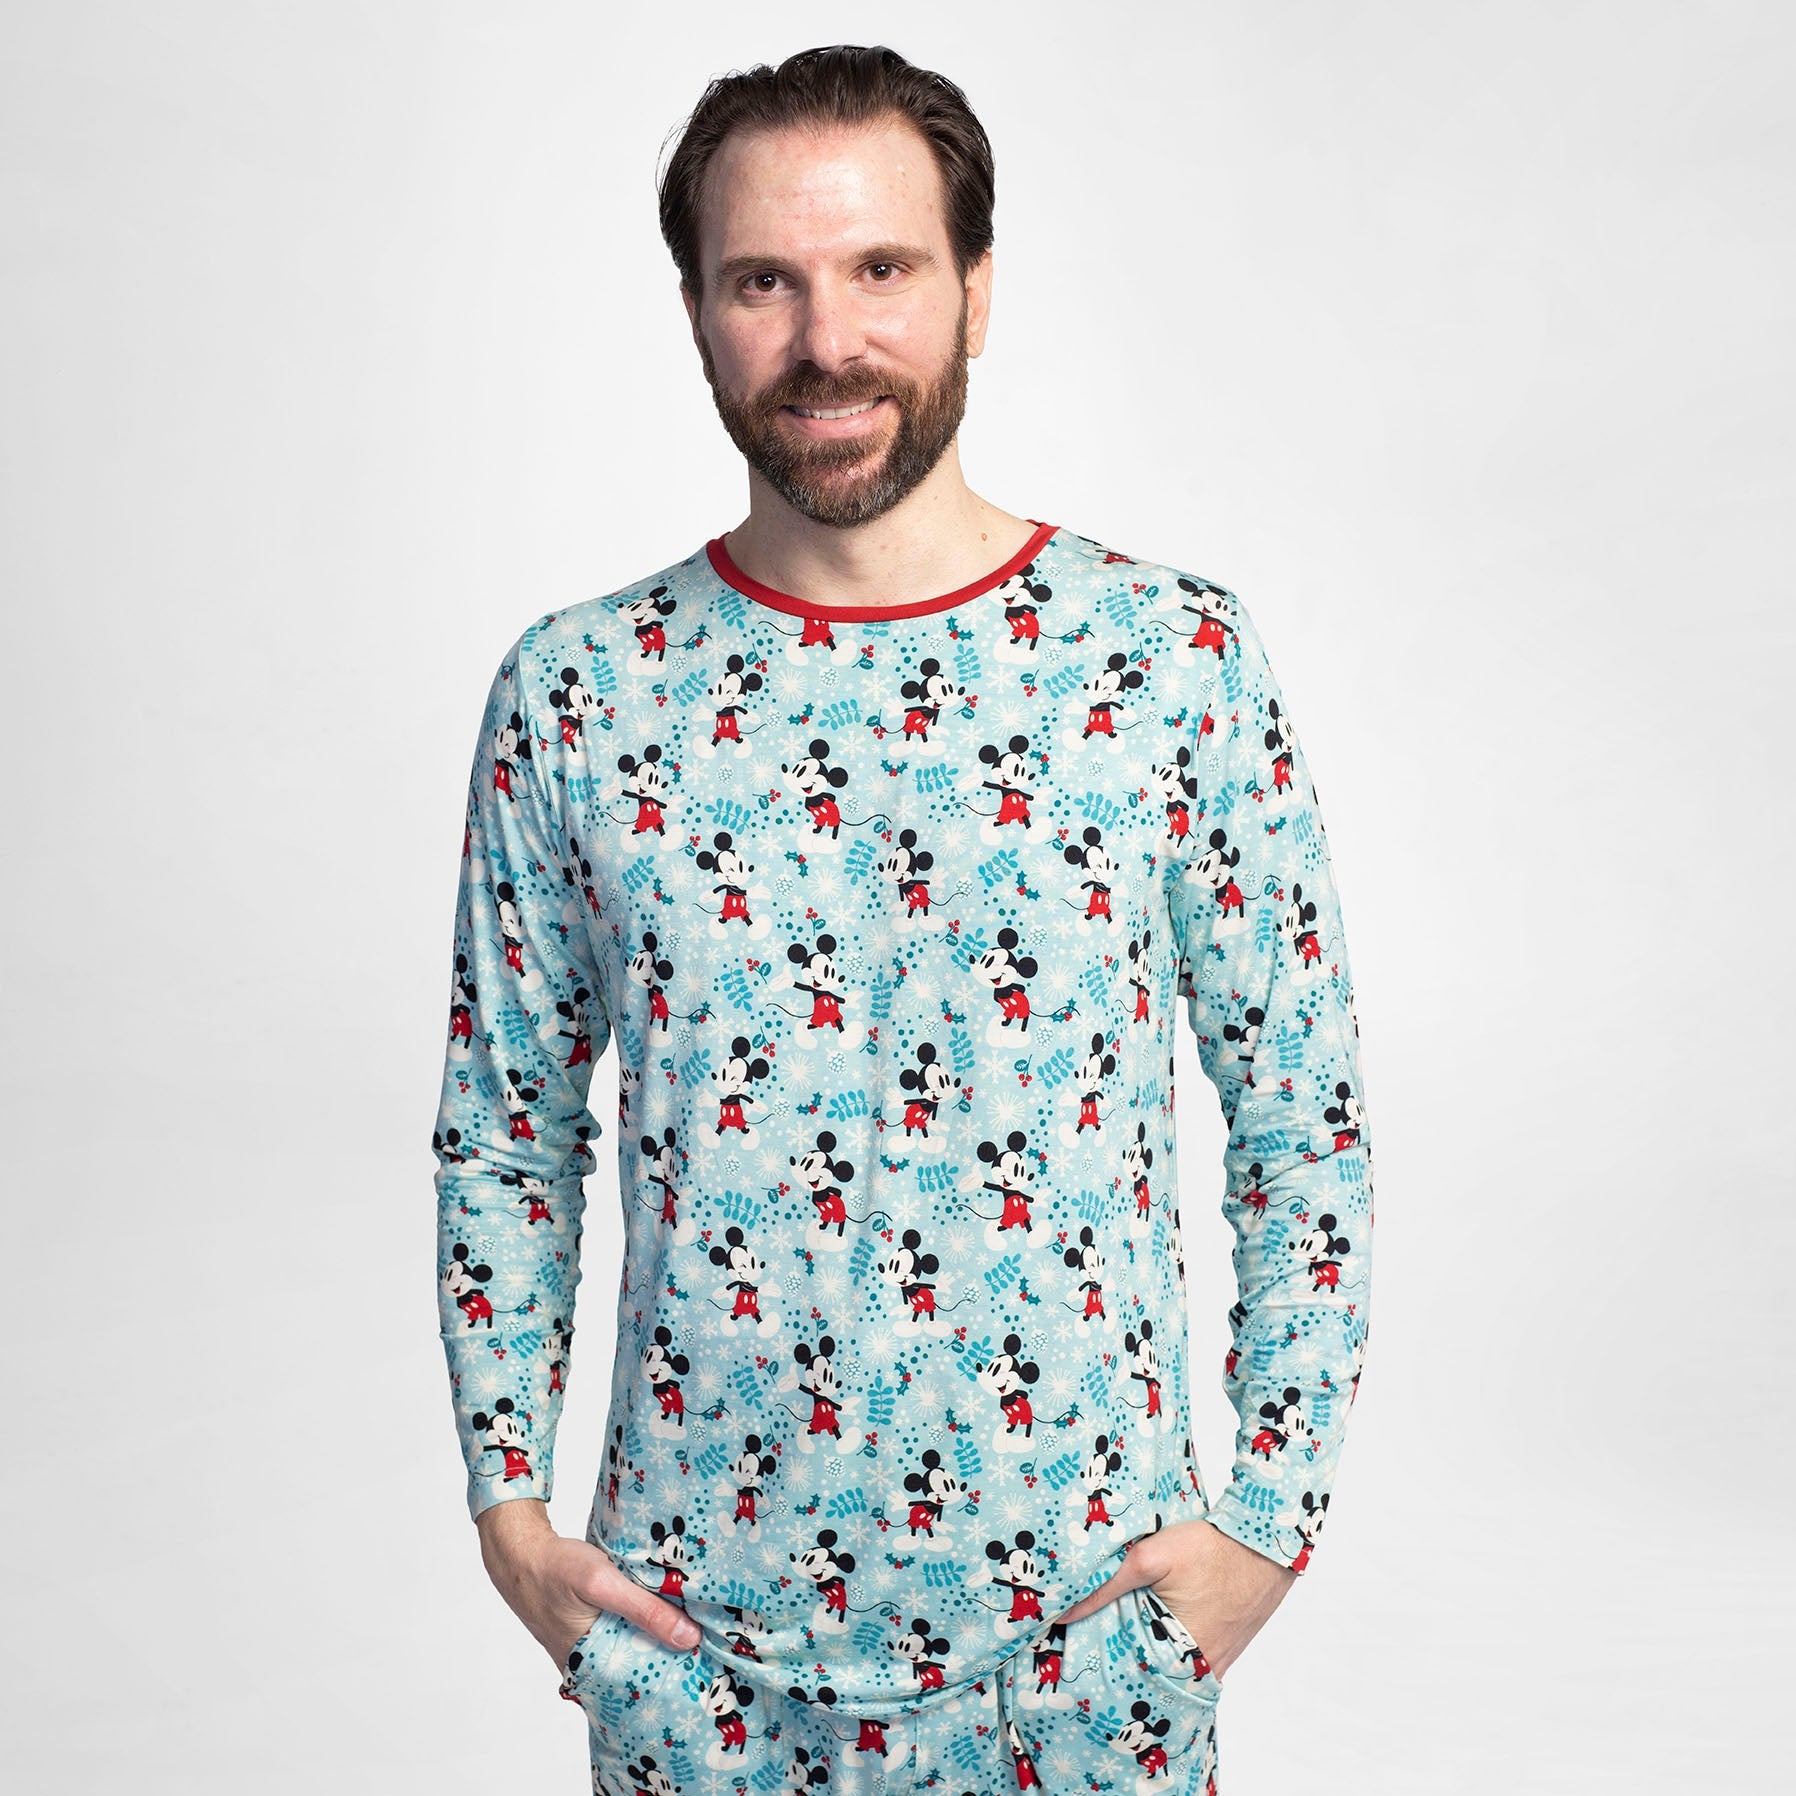 Disney Mens Pyjamas, Mickey Mouse Pyjamas for Men, Disney Gifts